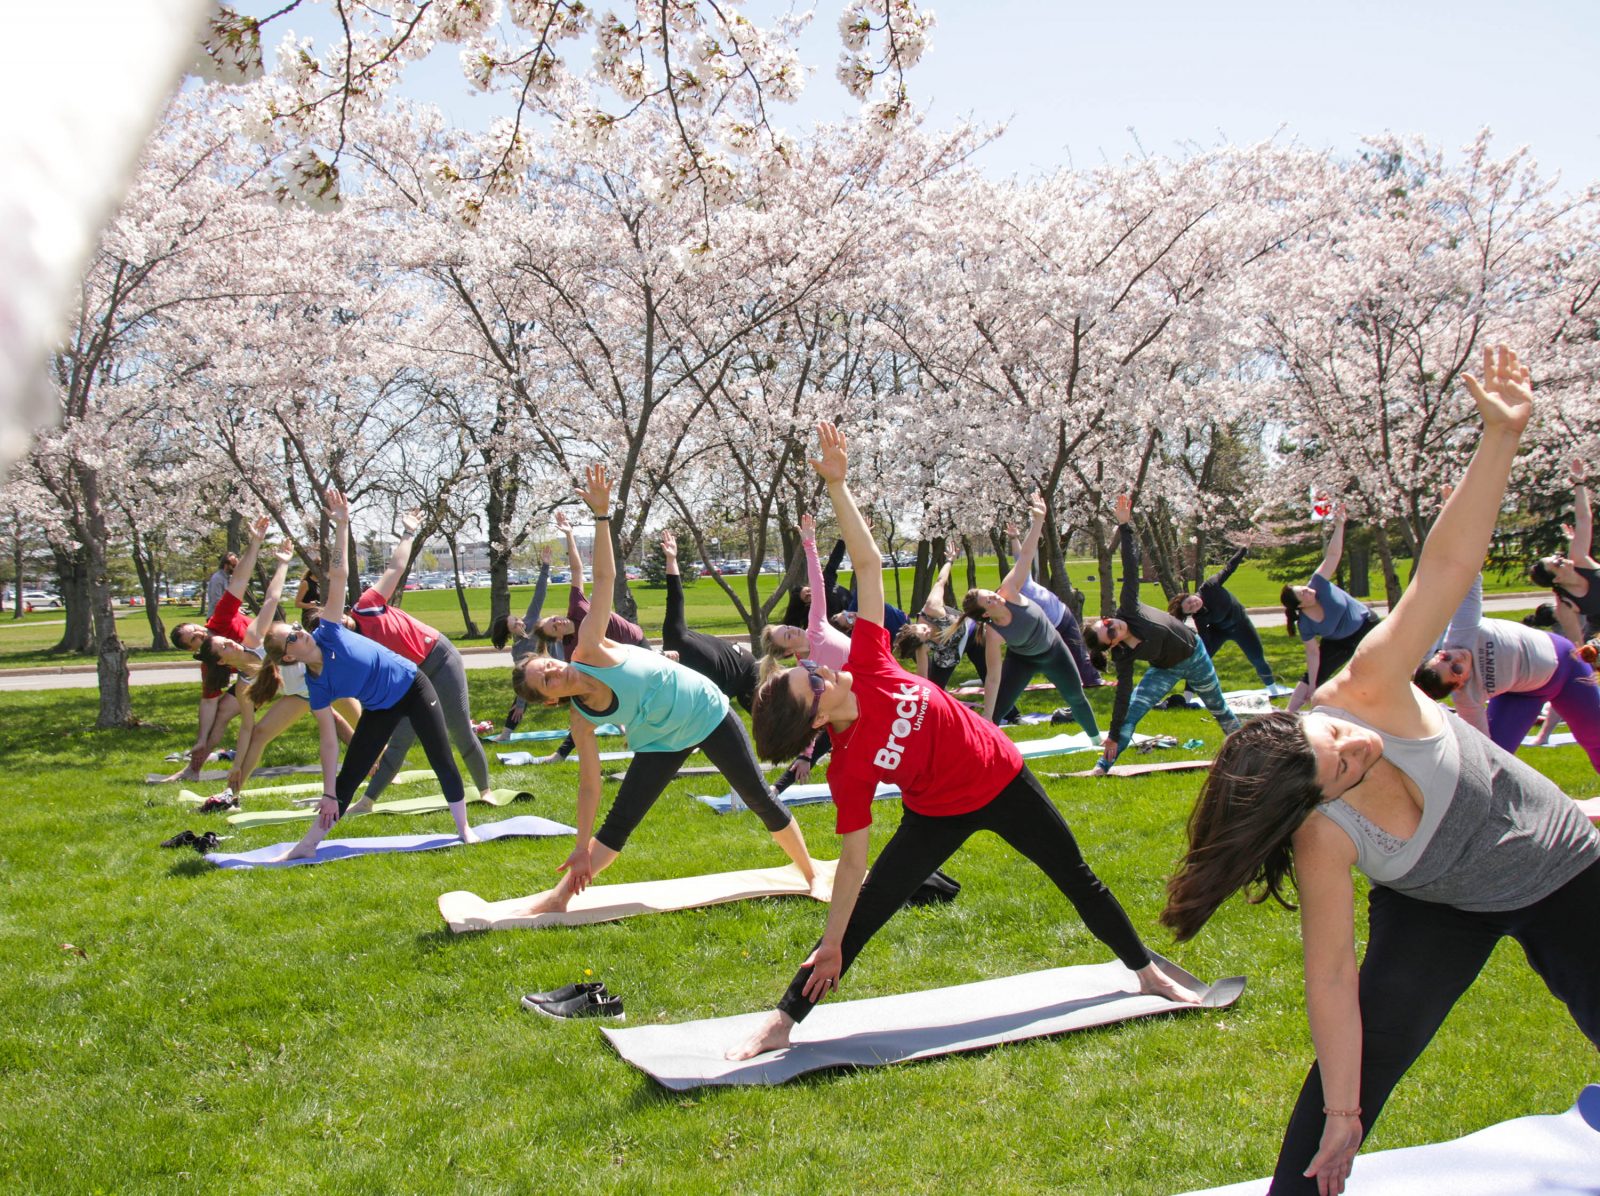 Cherry blossom yoga held at Brock – The Brock News